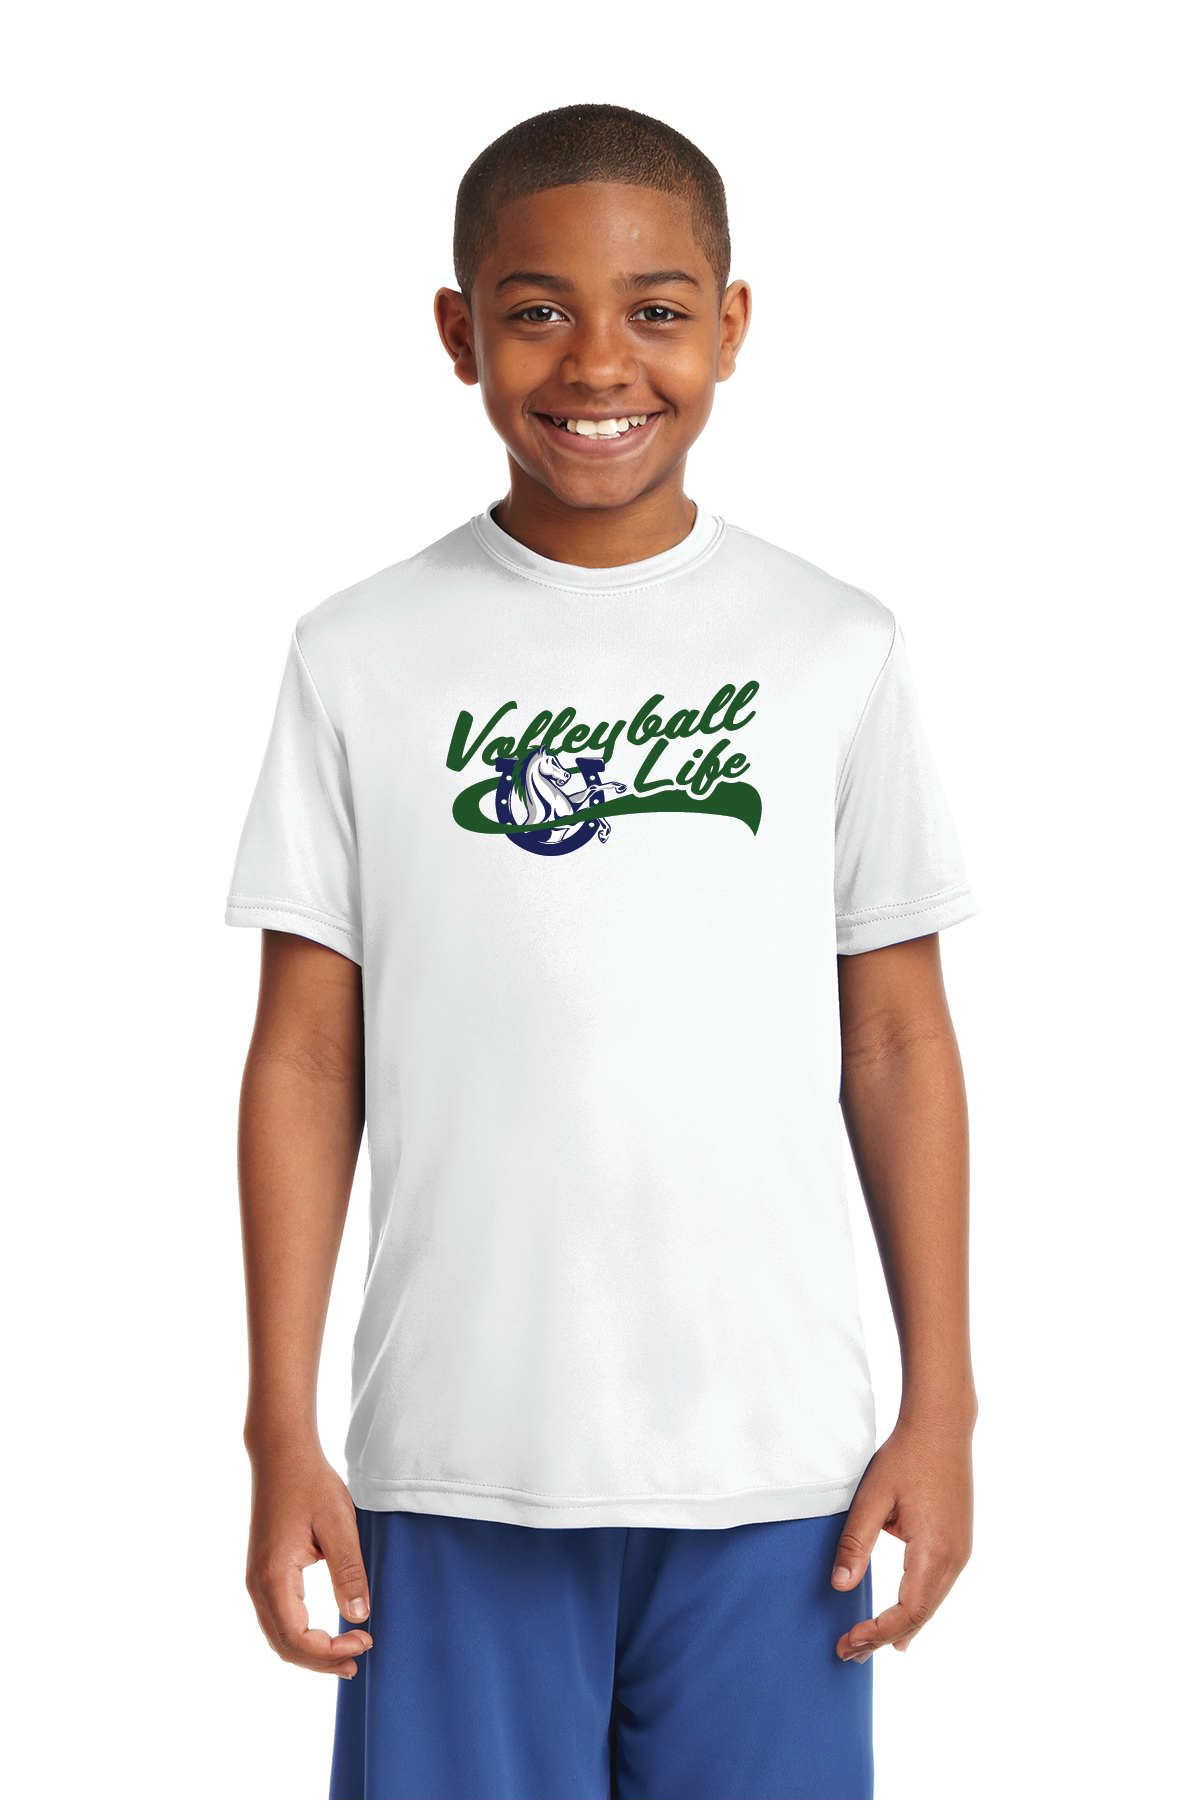 McNeil Volleyball Life T-Shirt